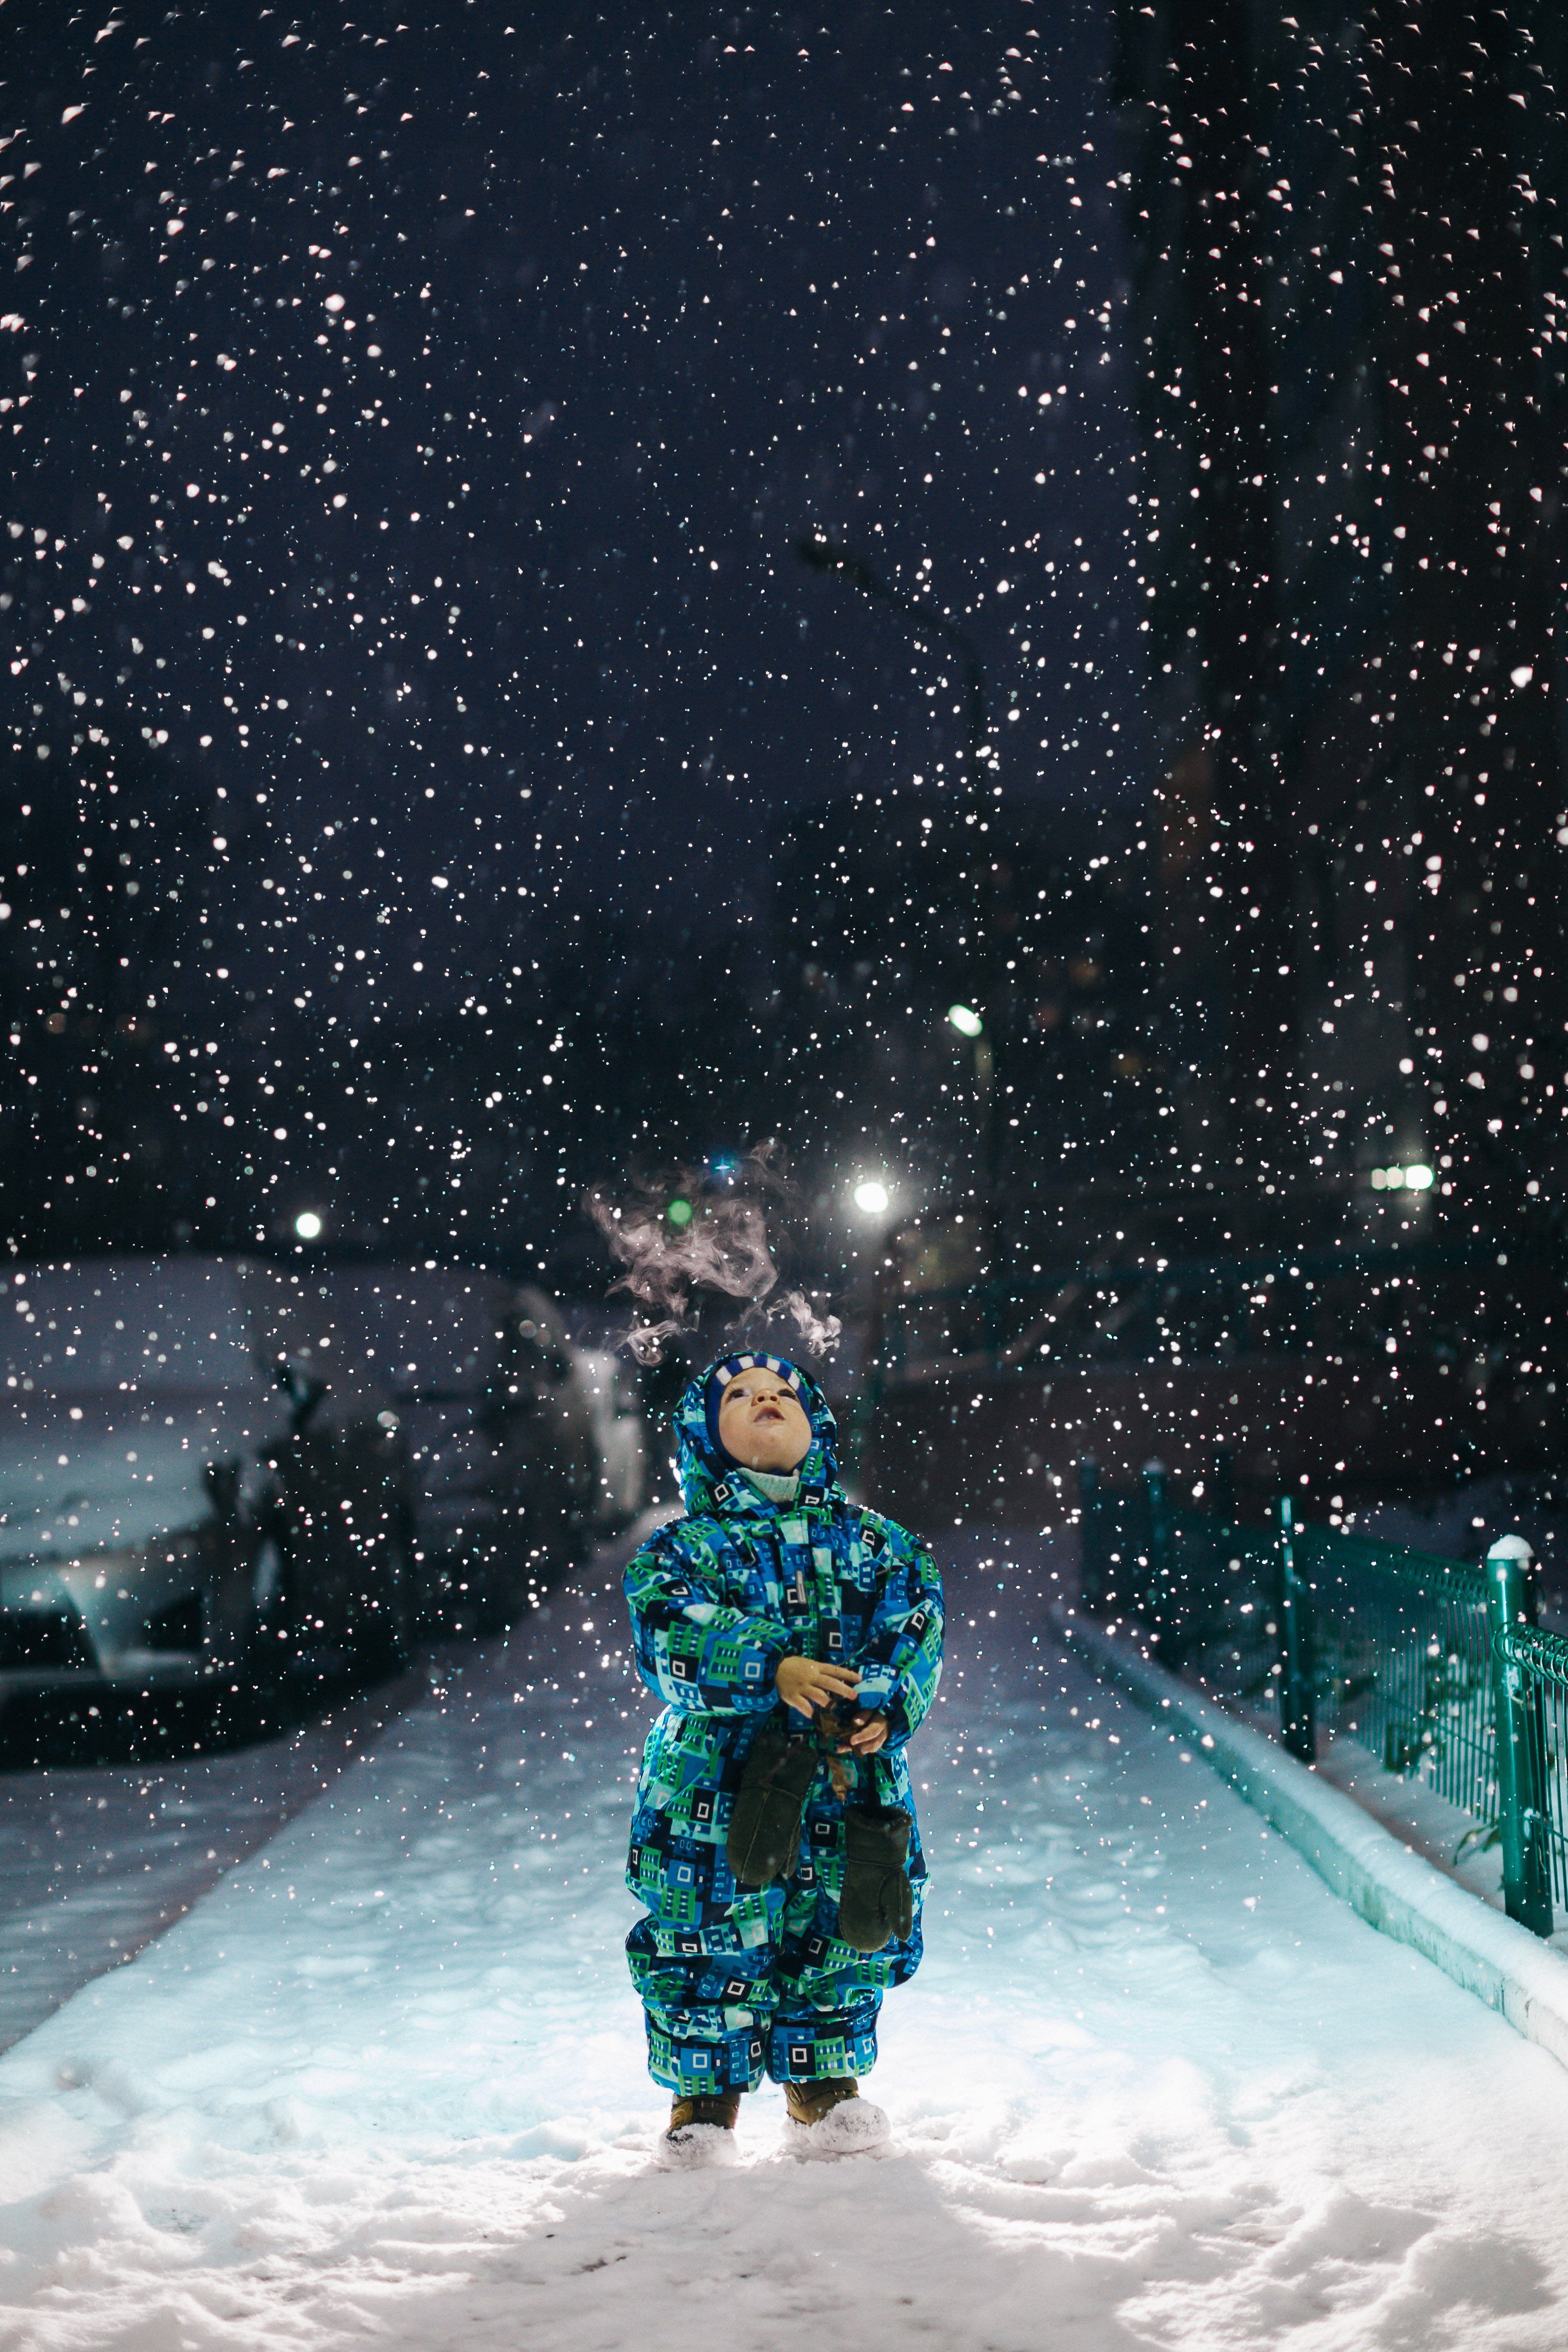 зима, снег, мальчик, ребенок, праздник, владивосток, приморье, Антон Блохин